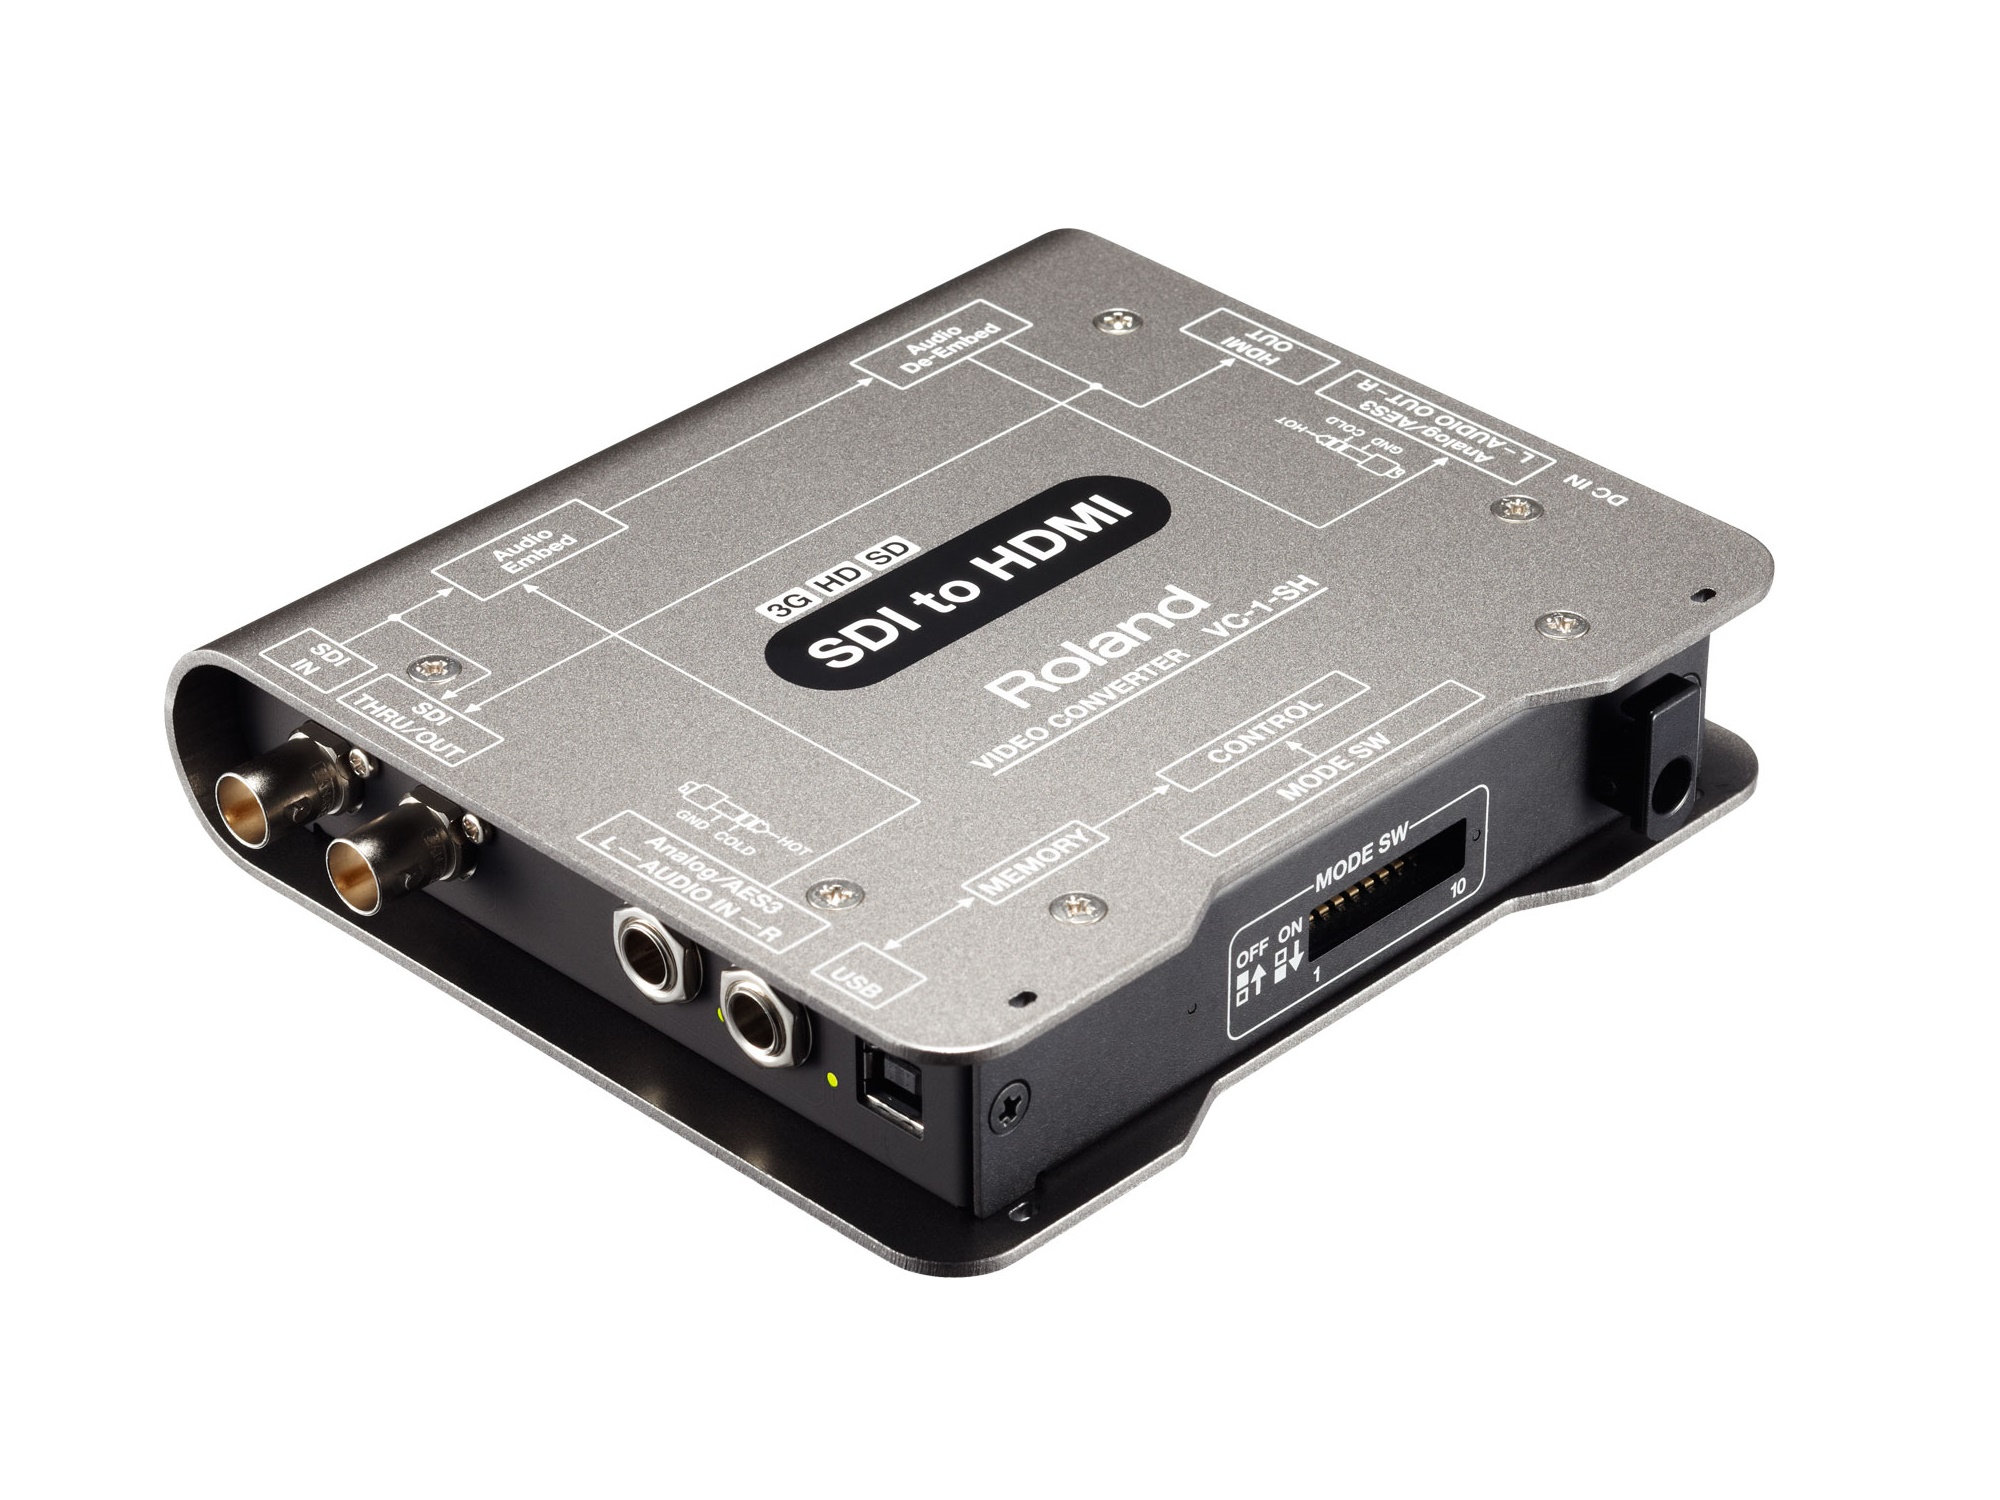 VC-1-SH SDI to HDMI Video Converter by Roland